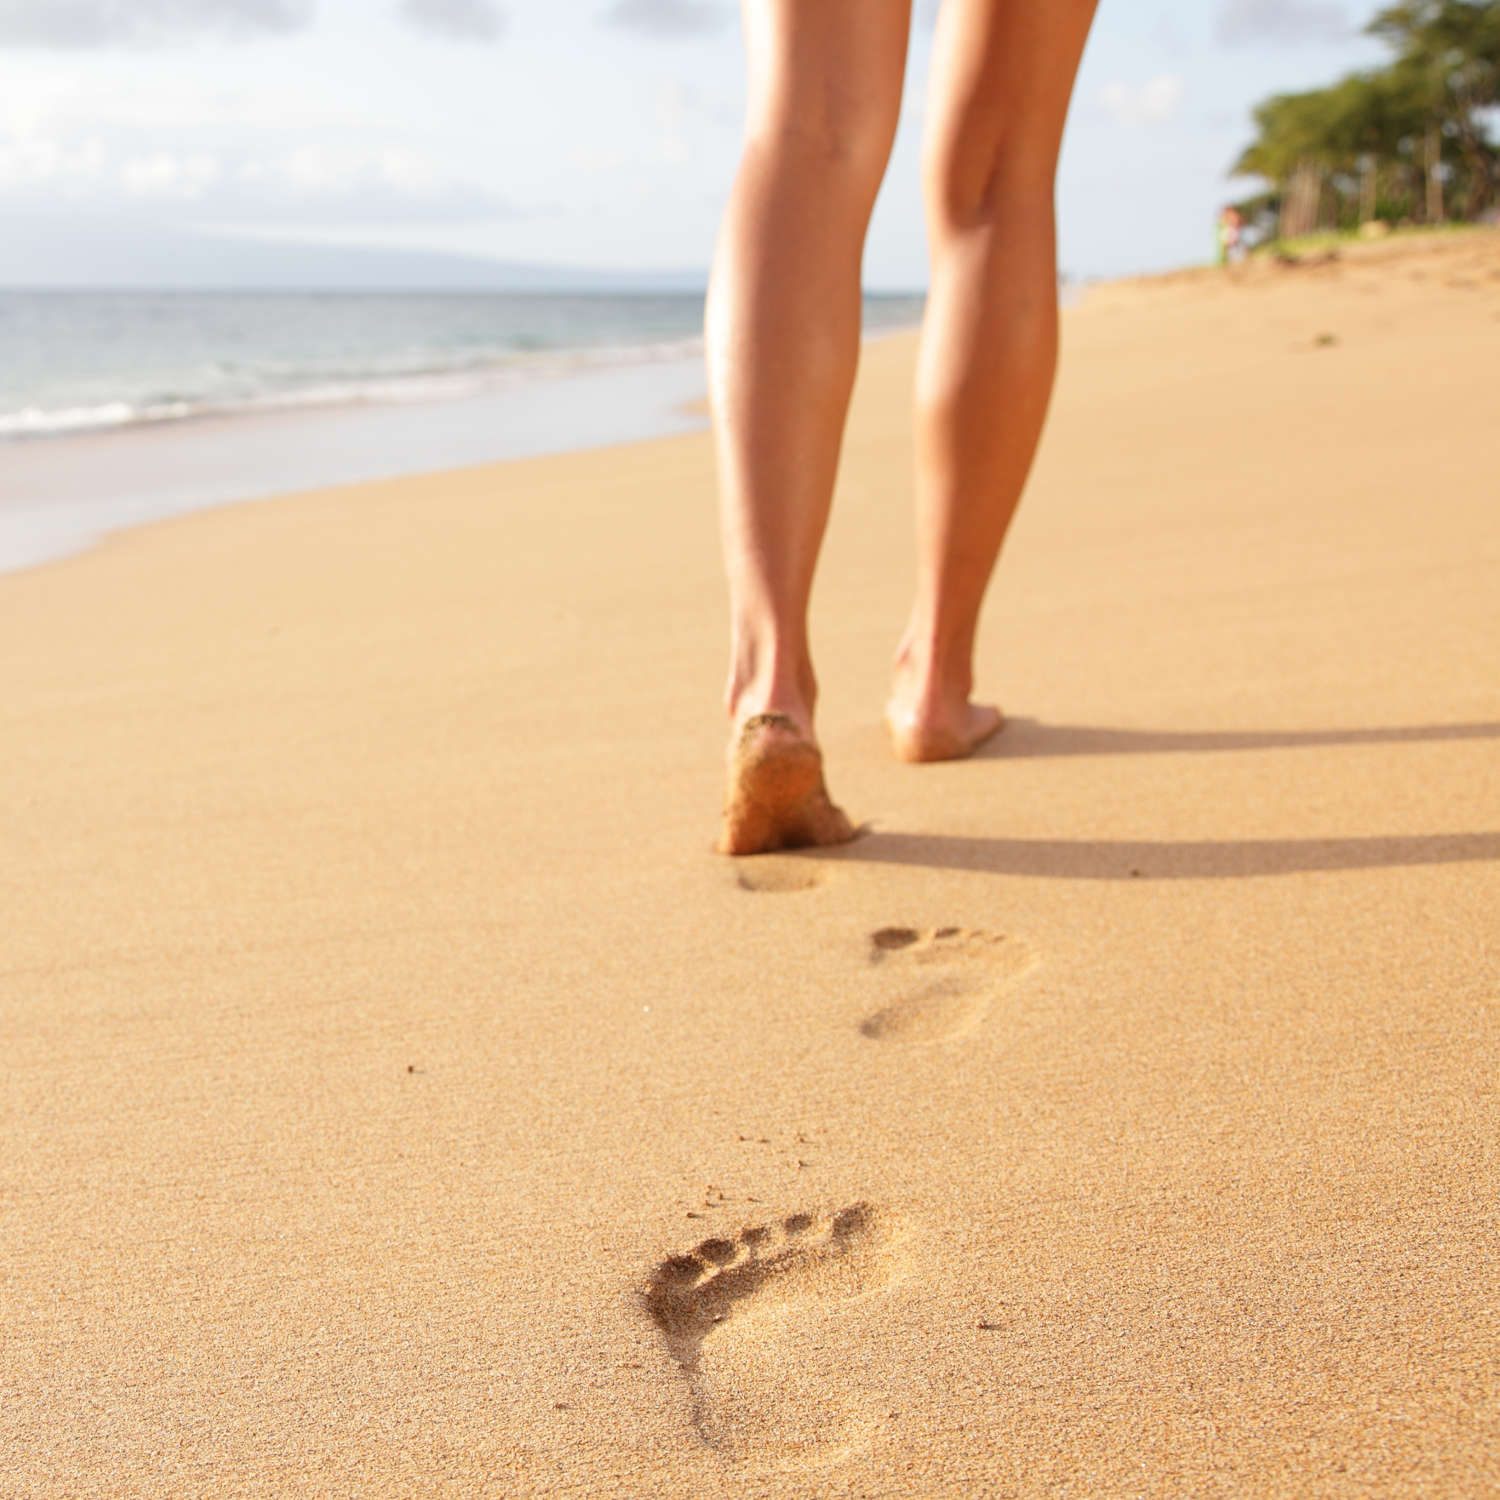 voetprint in zand